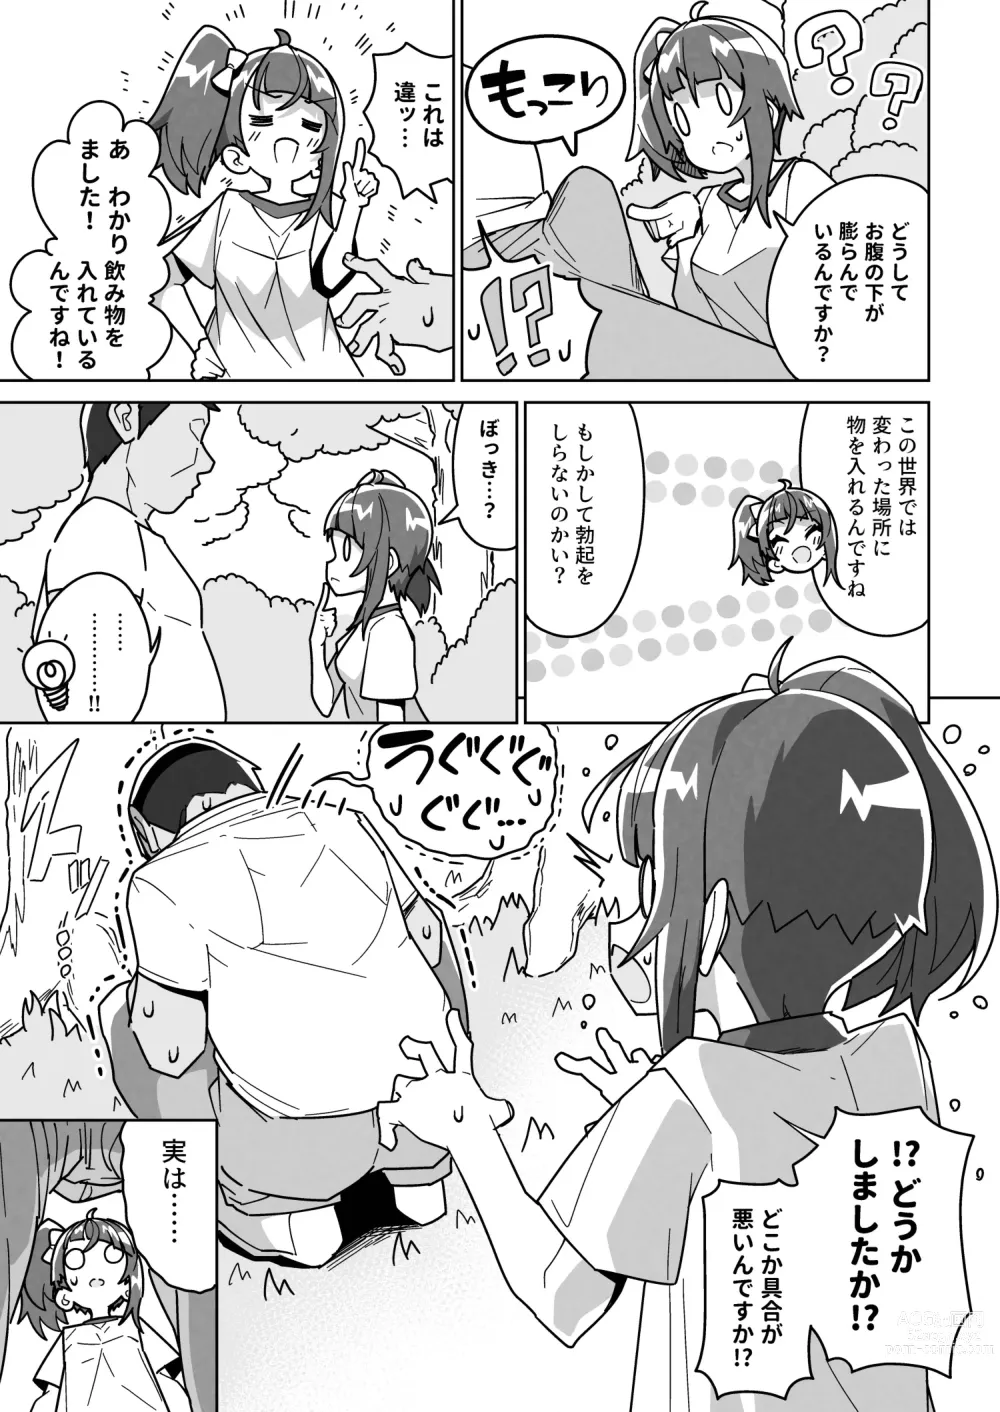 Page 7 of doujinshi Sora Damasare-ru